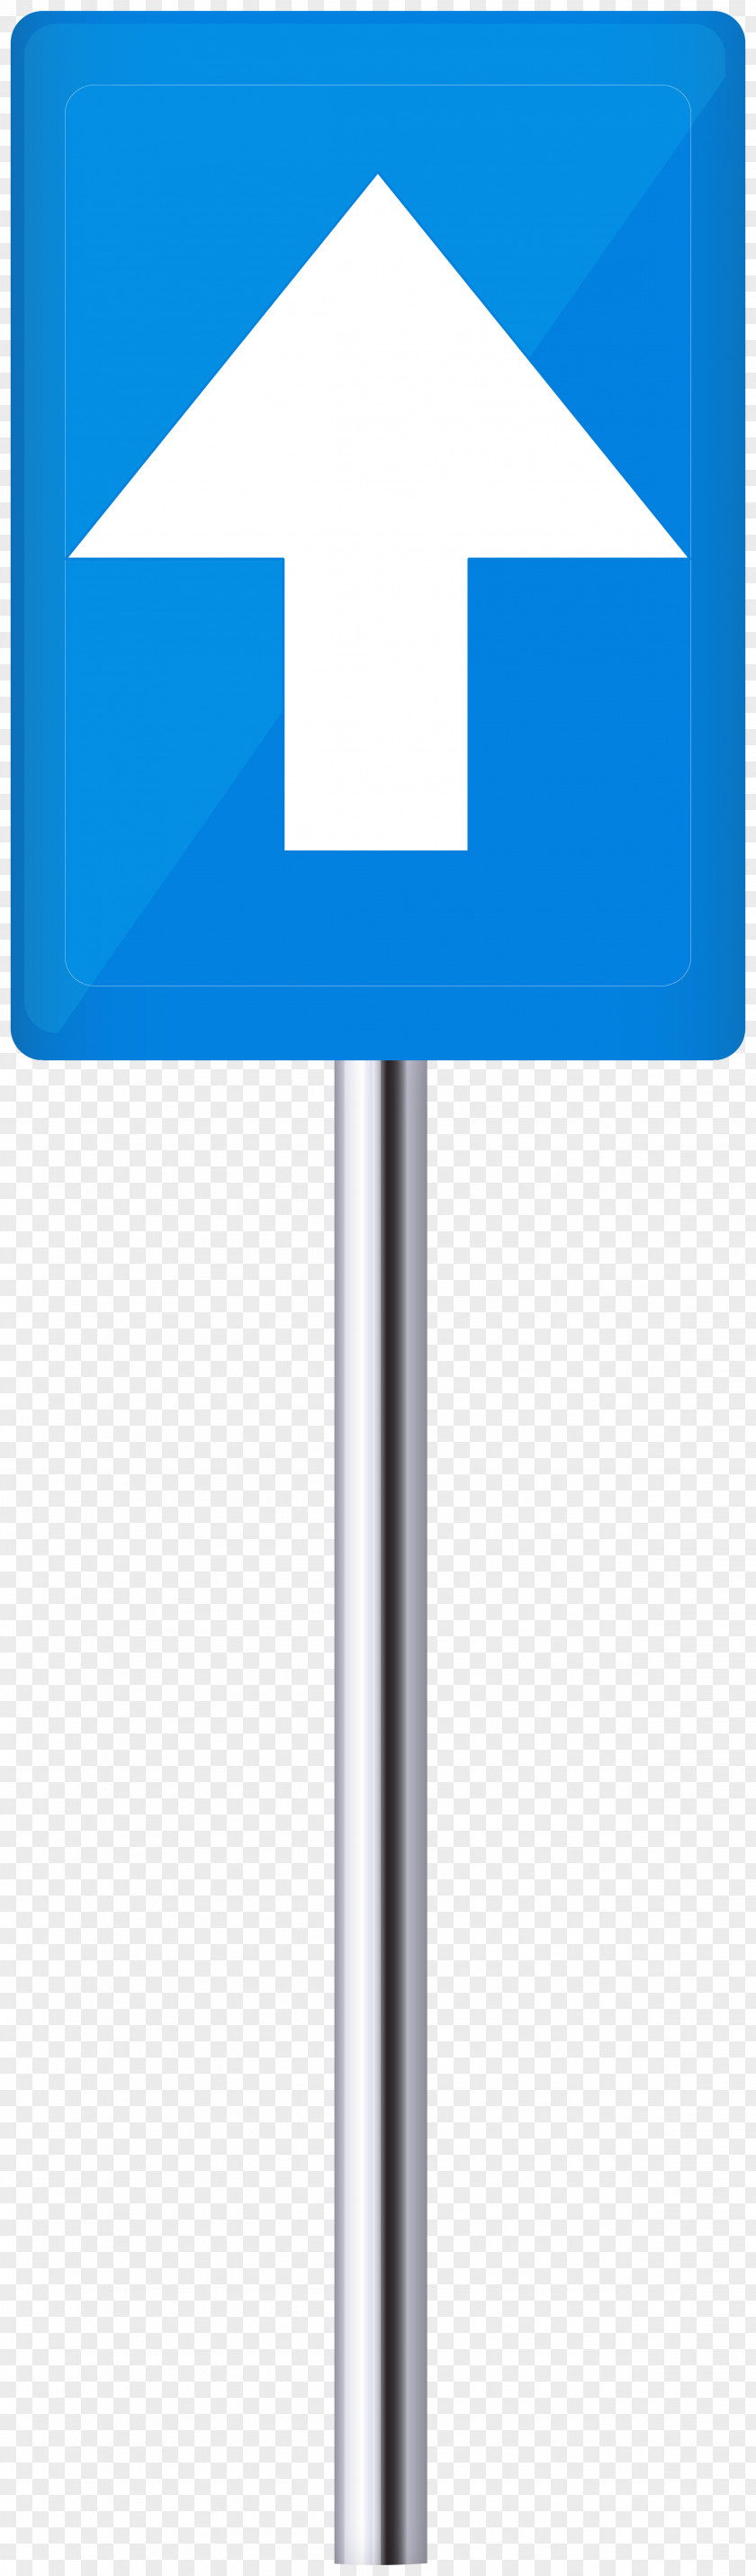 Way Sign Clip Art Traffic Image Vector Graphics PNG